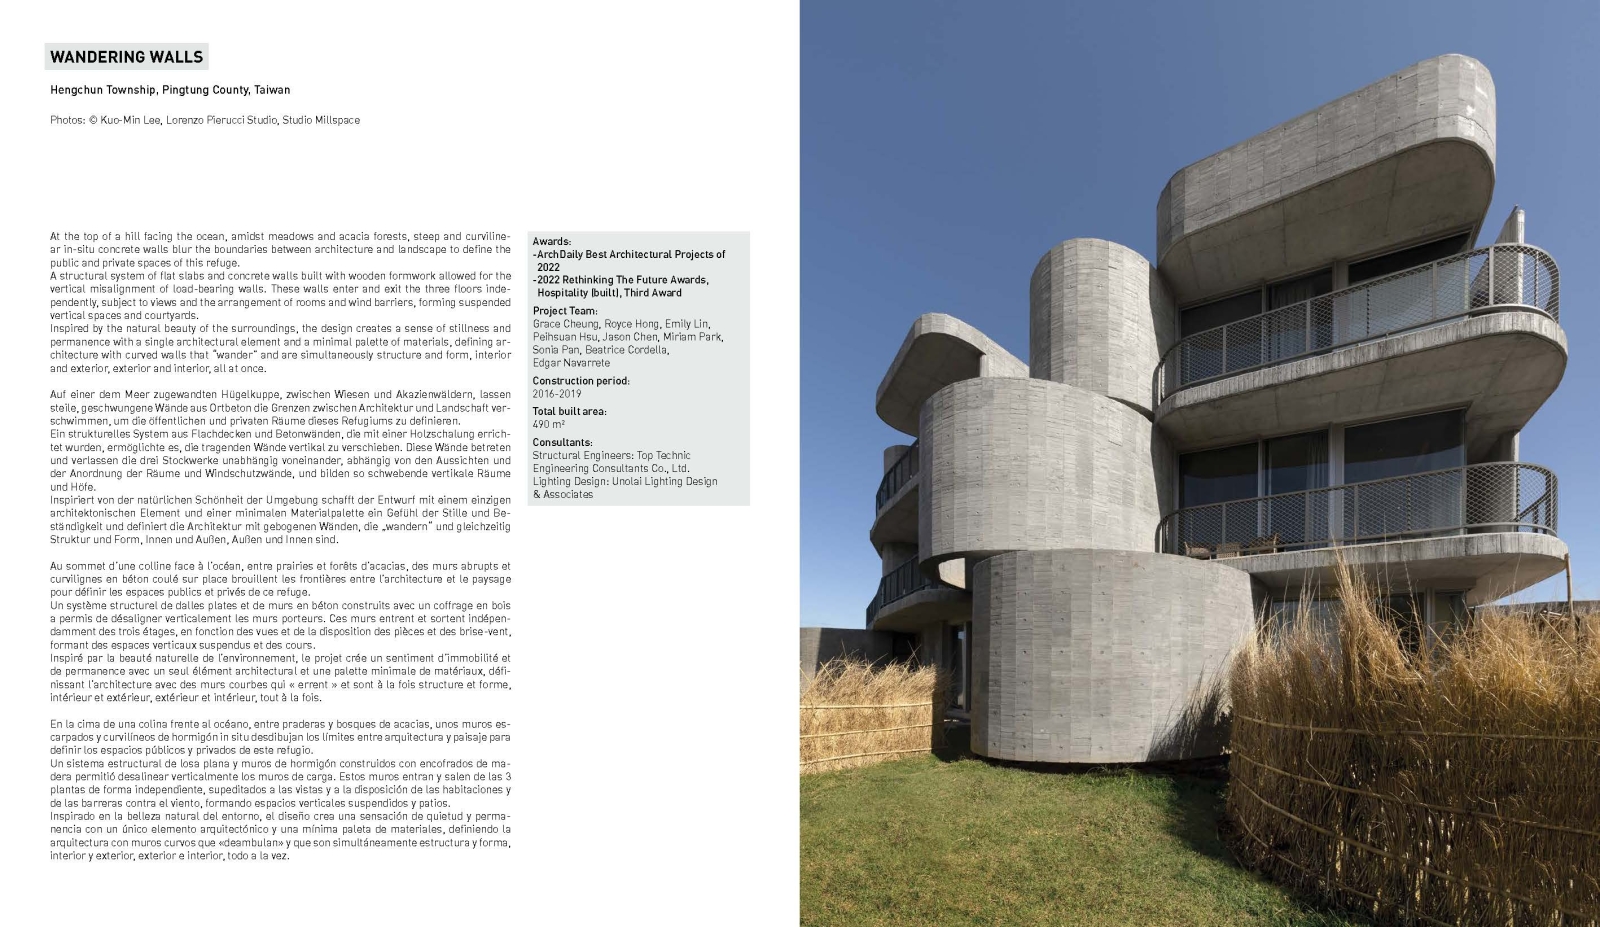 Concrete Architecture: Beyond Grey